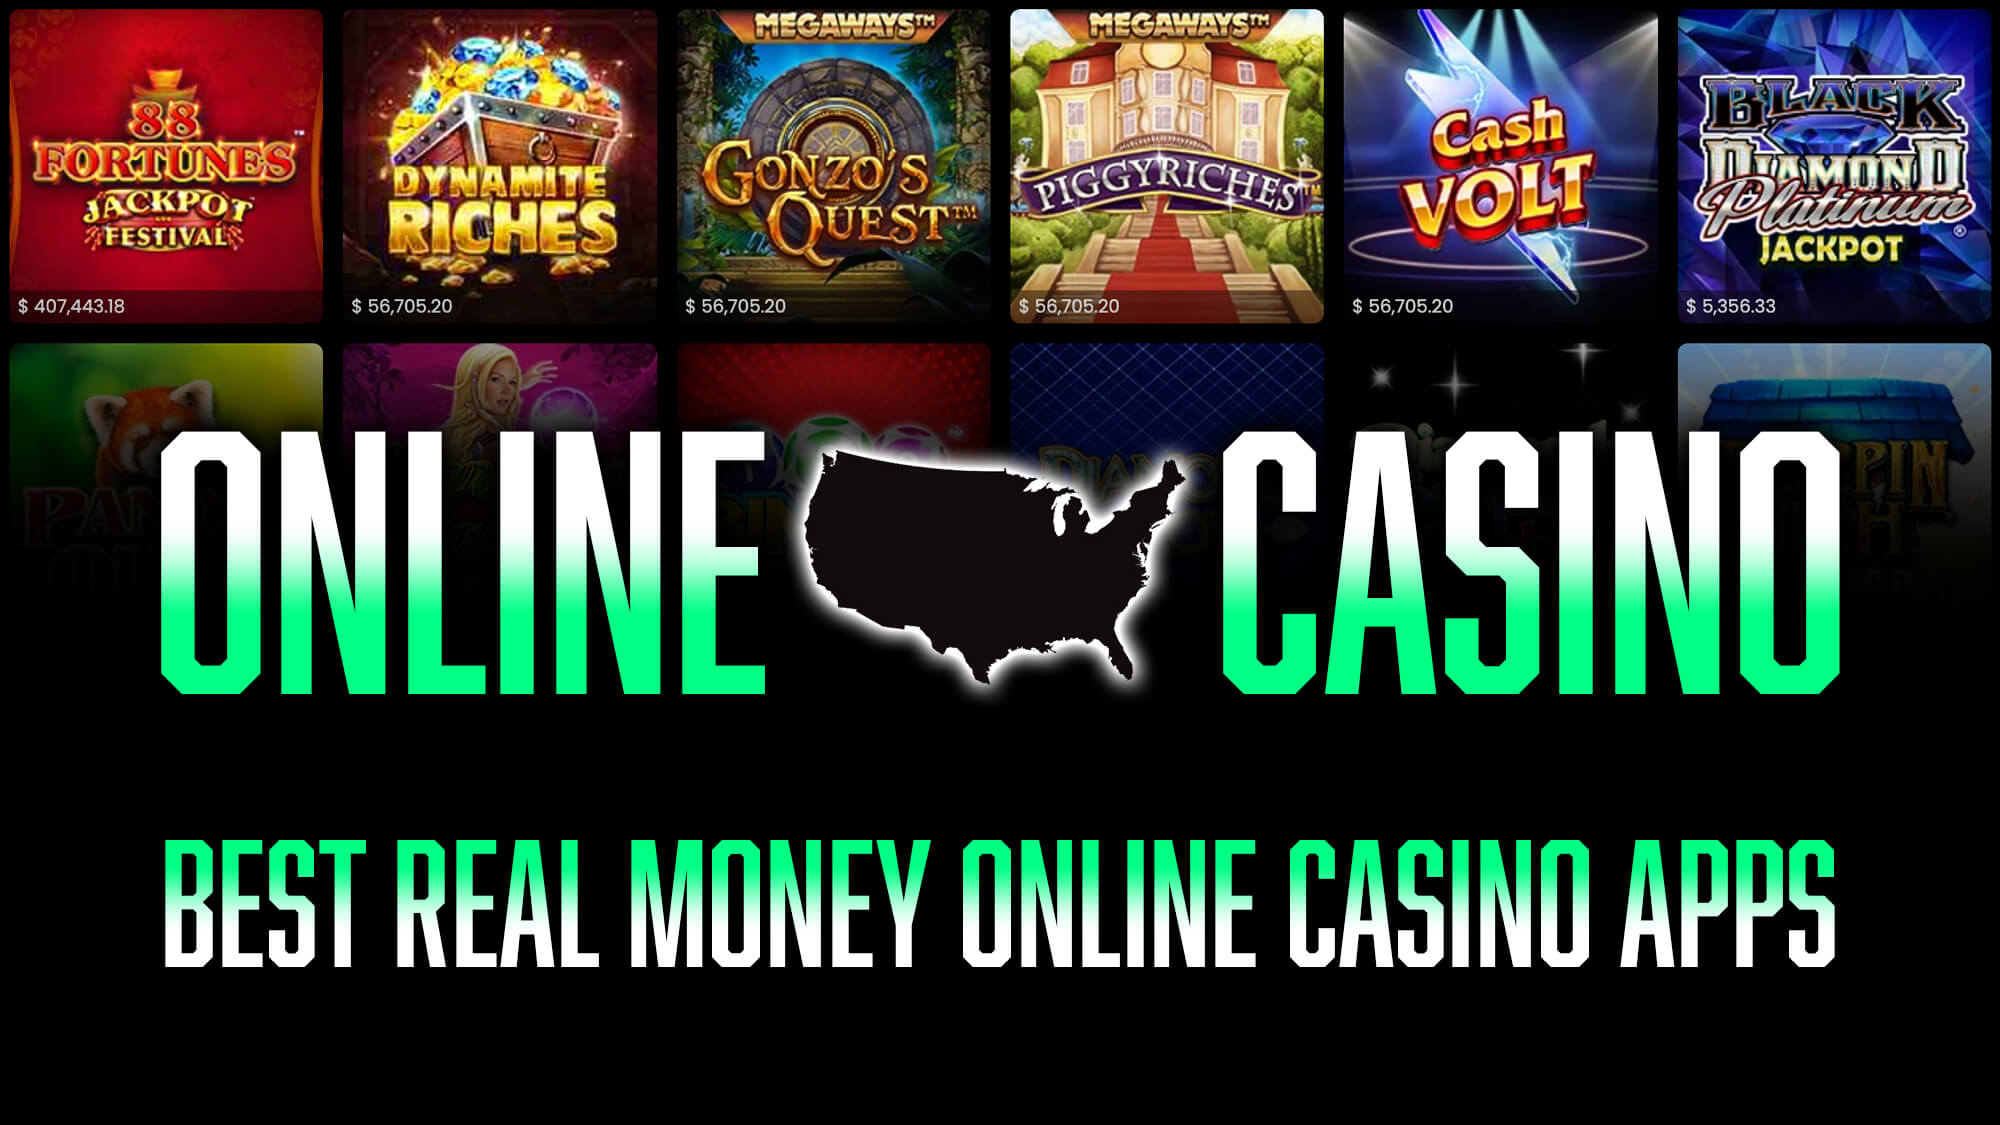 Cash For Casino